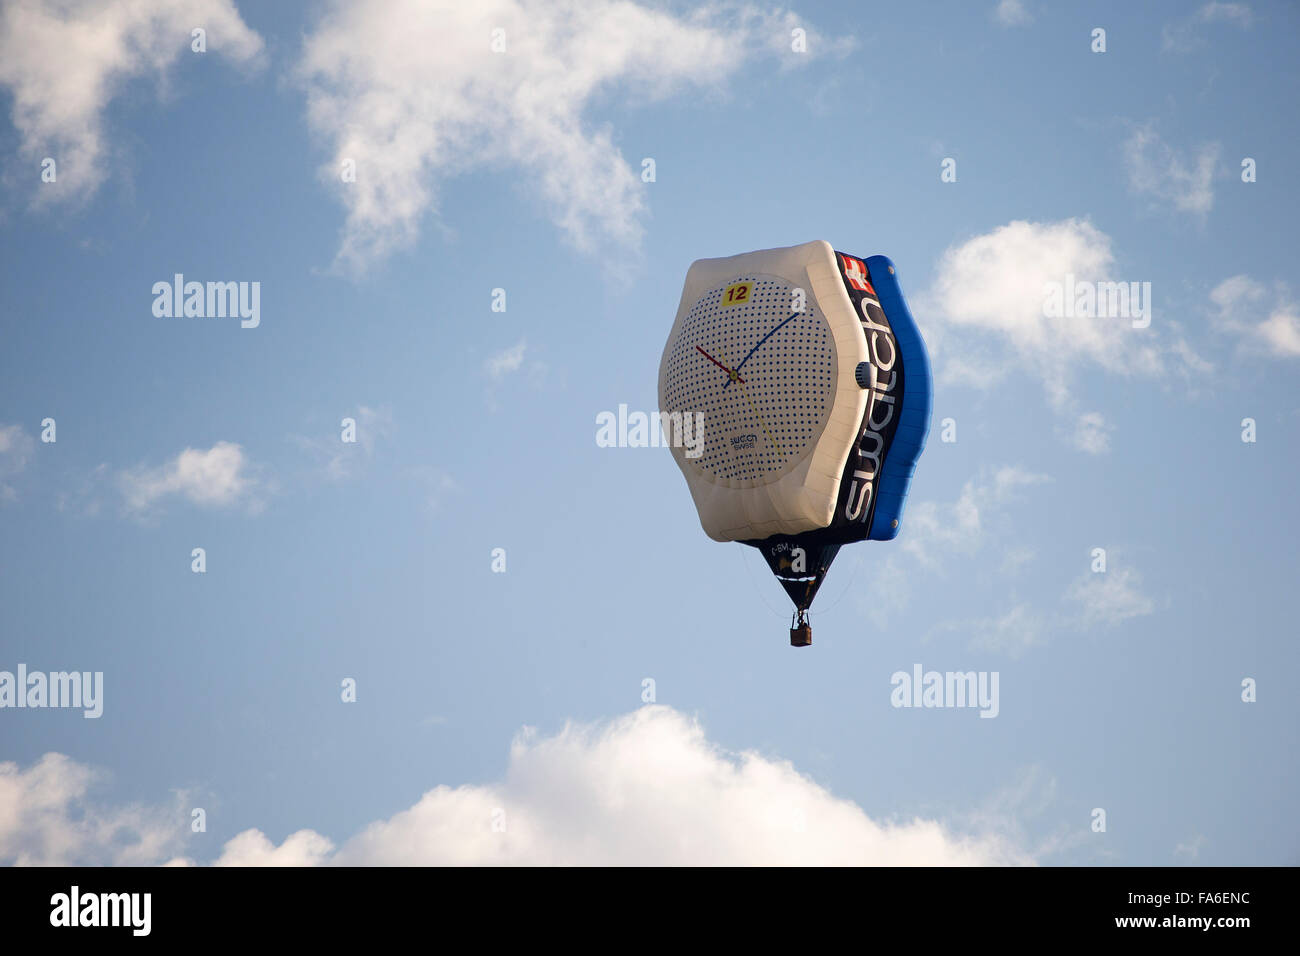 Swatch watch hot air balloon at the Bristol International Hot Air Balloon Fiesta 2015 Stock Photo